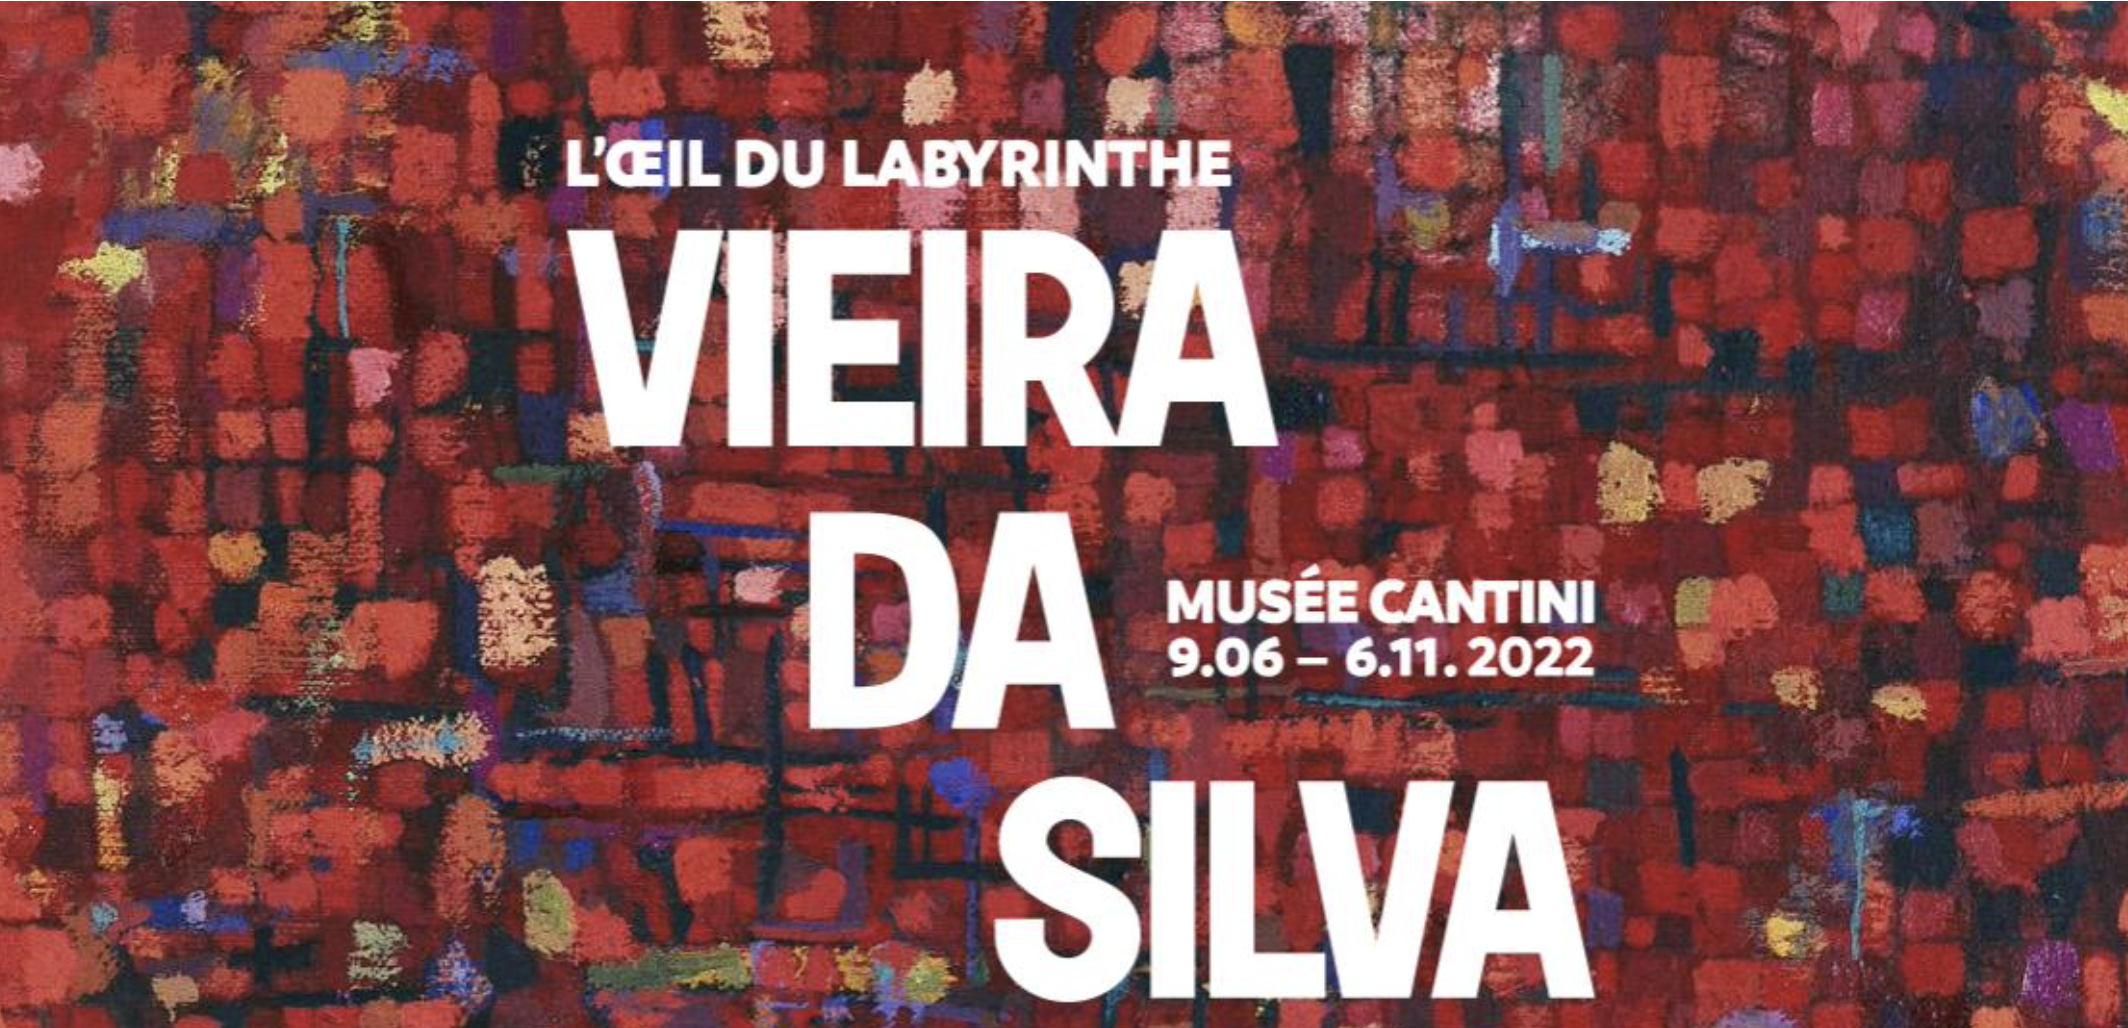 Vieira da Silva, l’oeil du labyrinthe